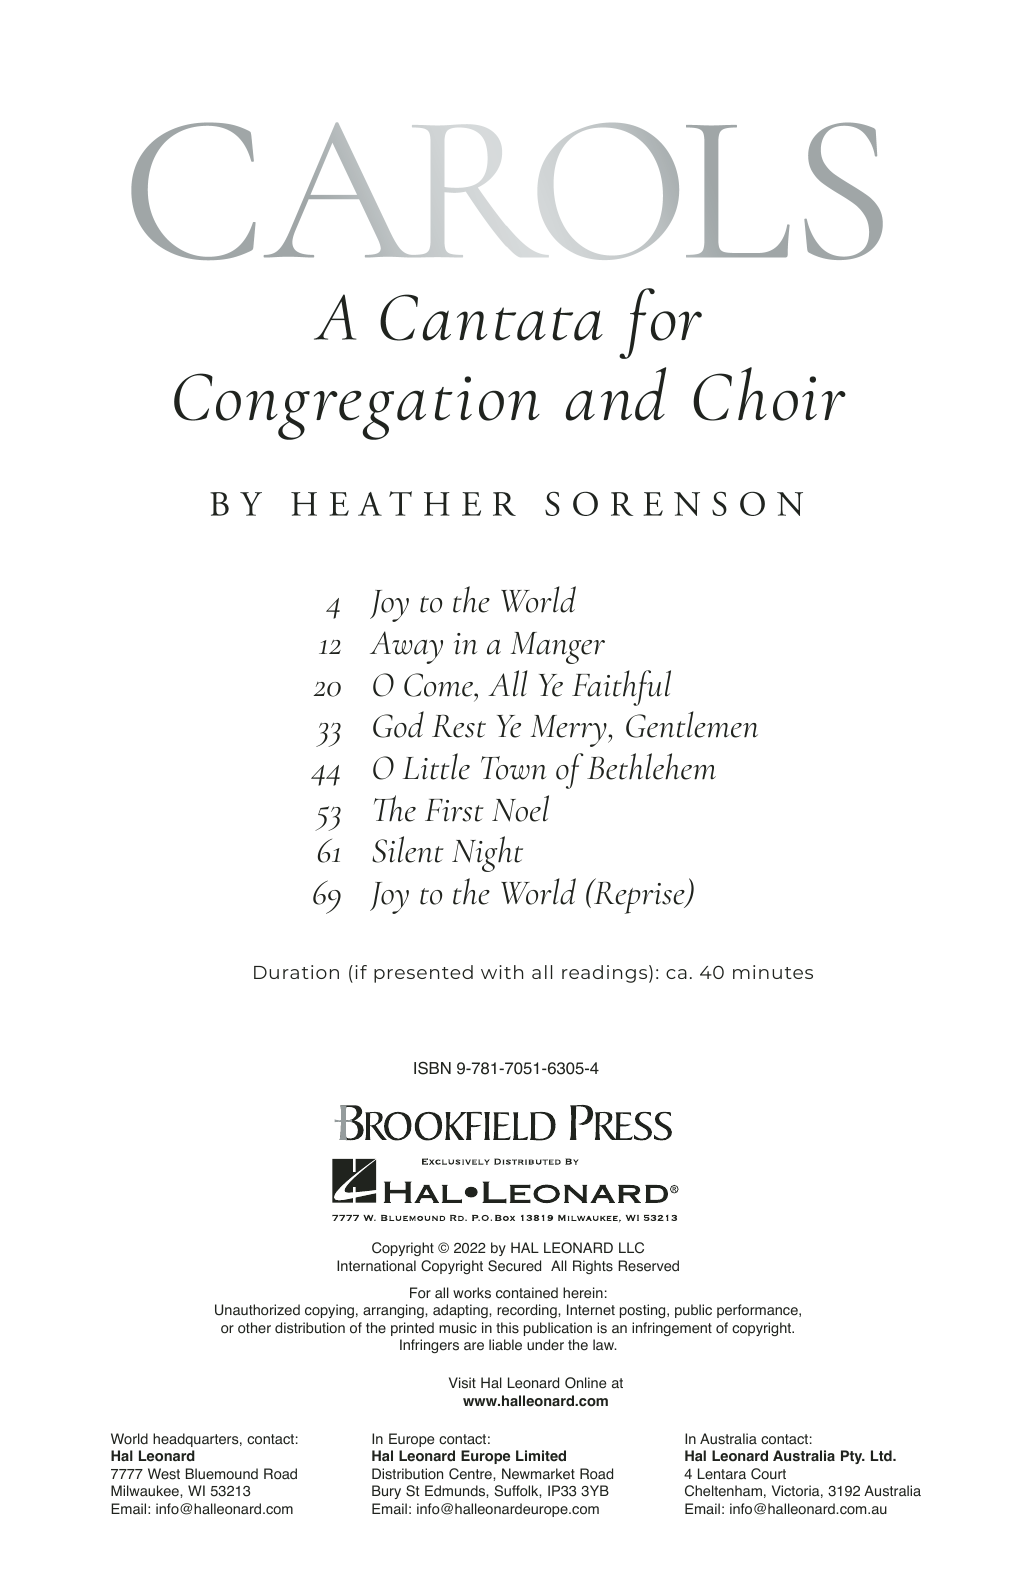 Heather Sorenson Carols (A Cantata for Congregation and Choir) Sheet Music Notes & Chords for SATB Choir - Download or Print PDF